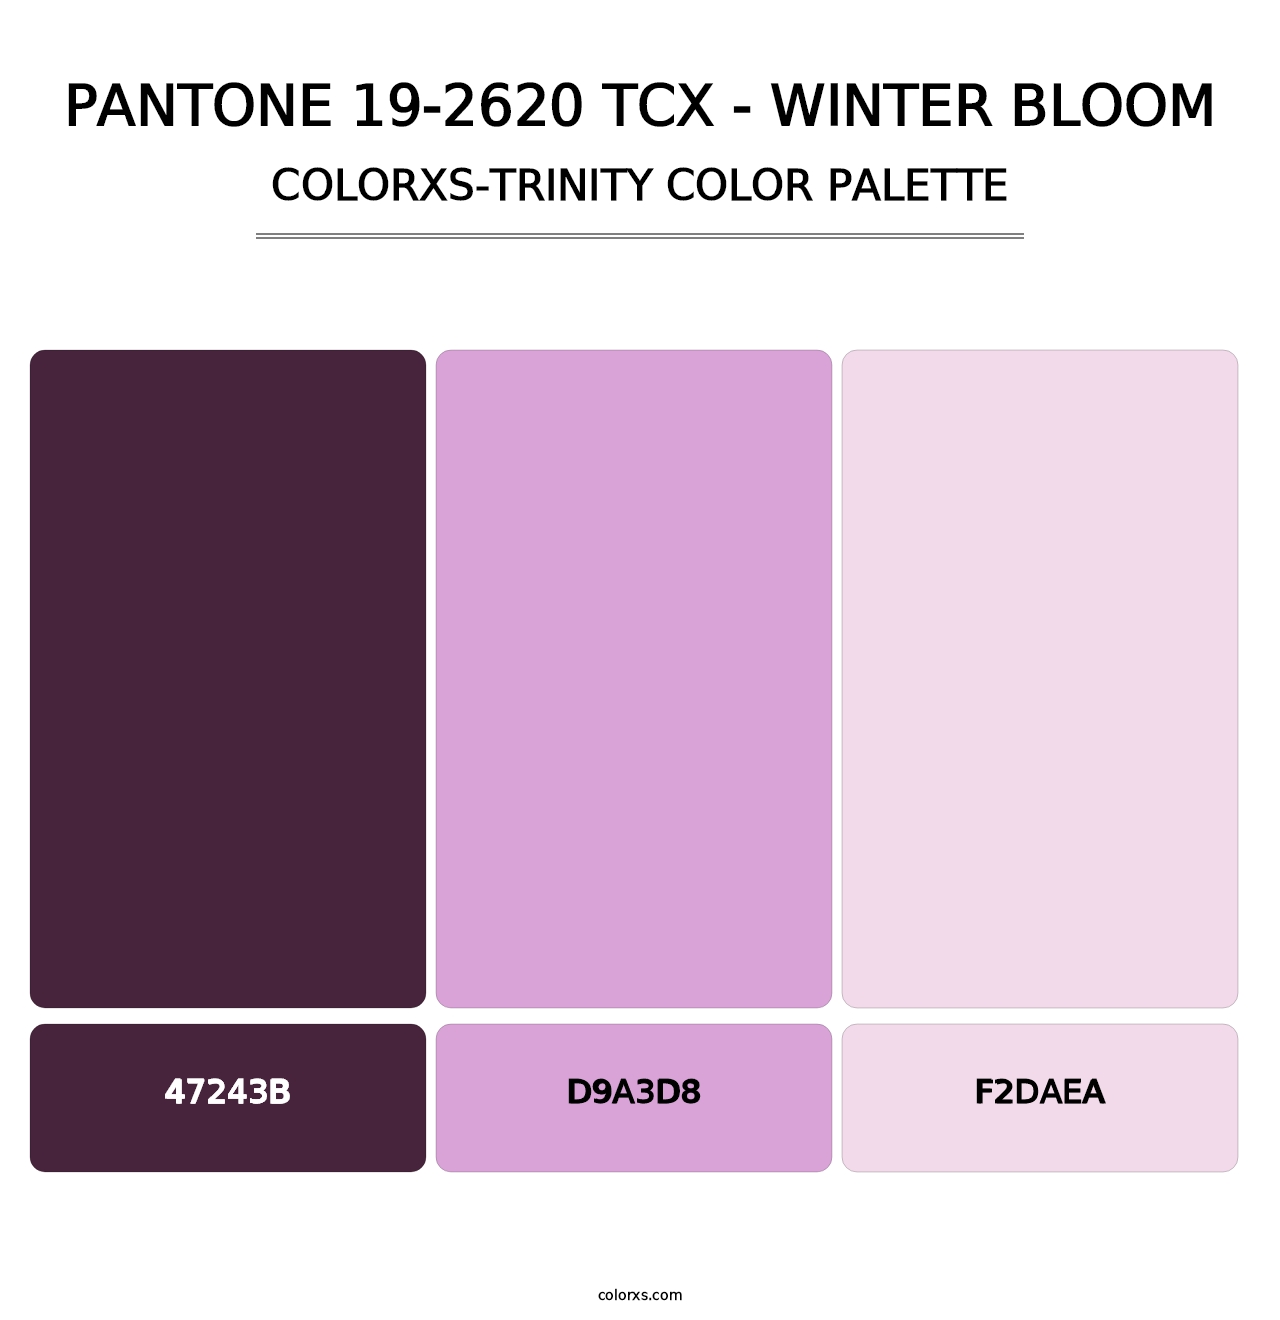 PANTONE 19-2620 TCX - Winter Bloom - Colorxs Trinity Palette